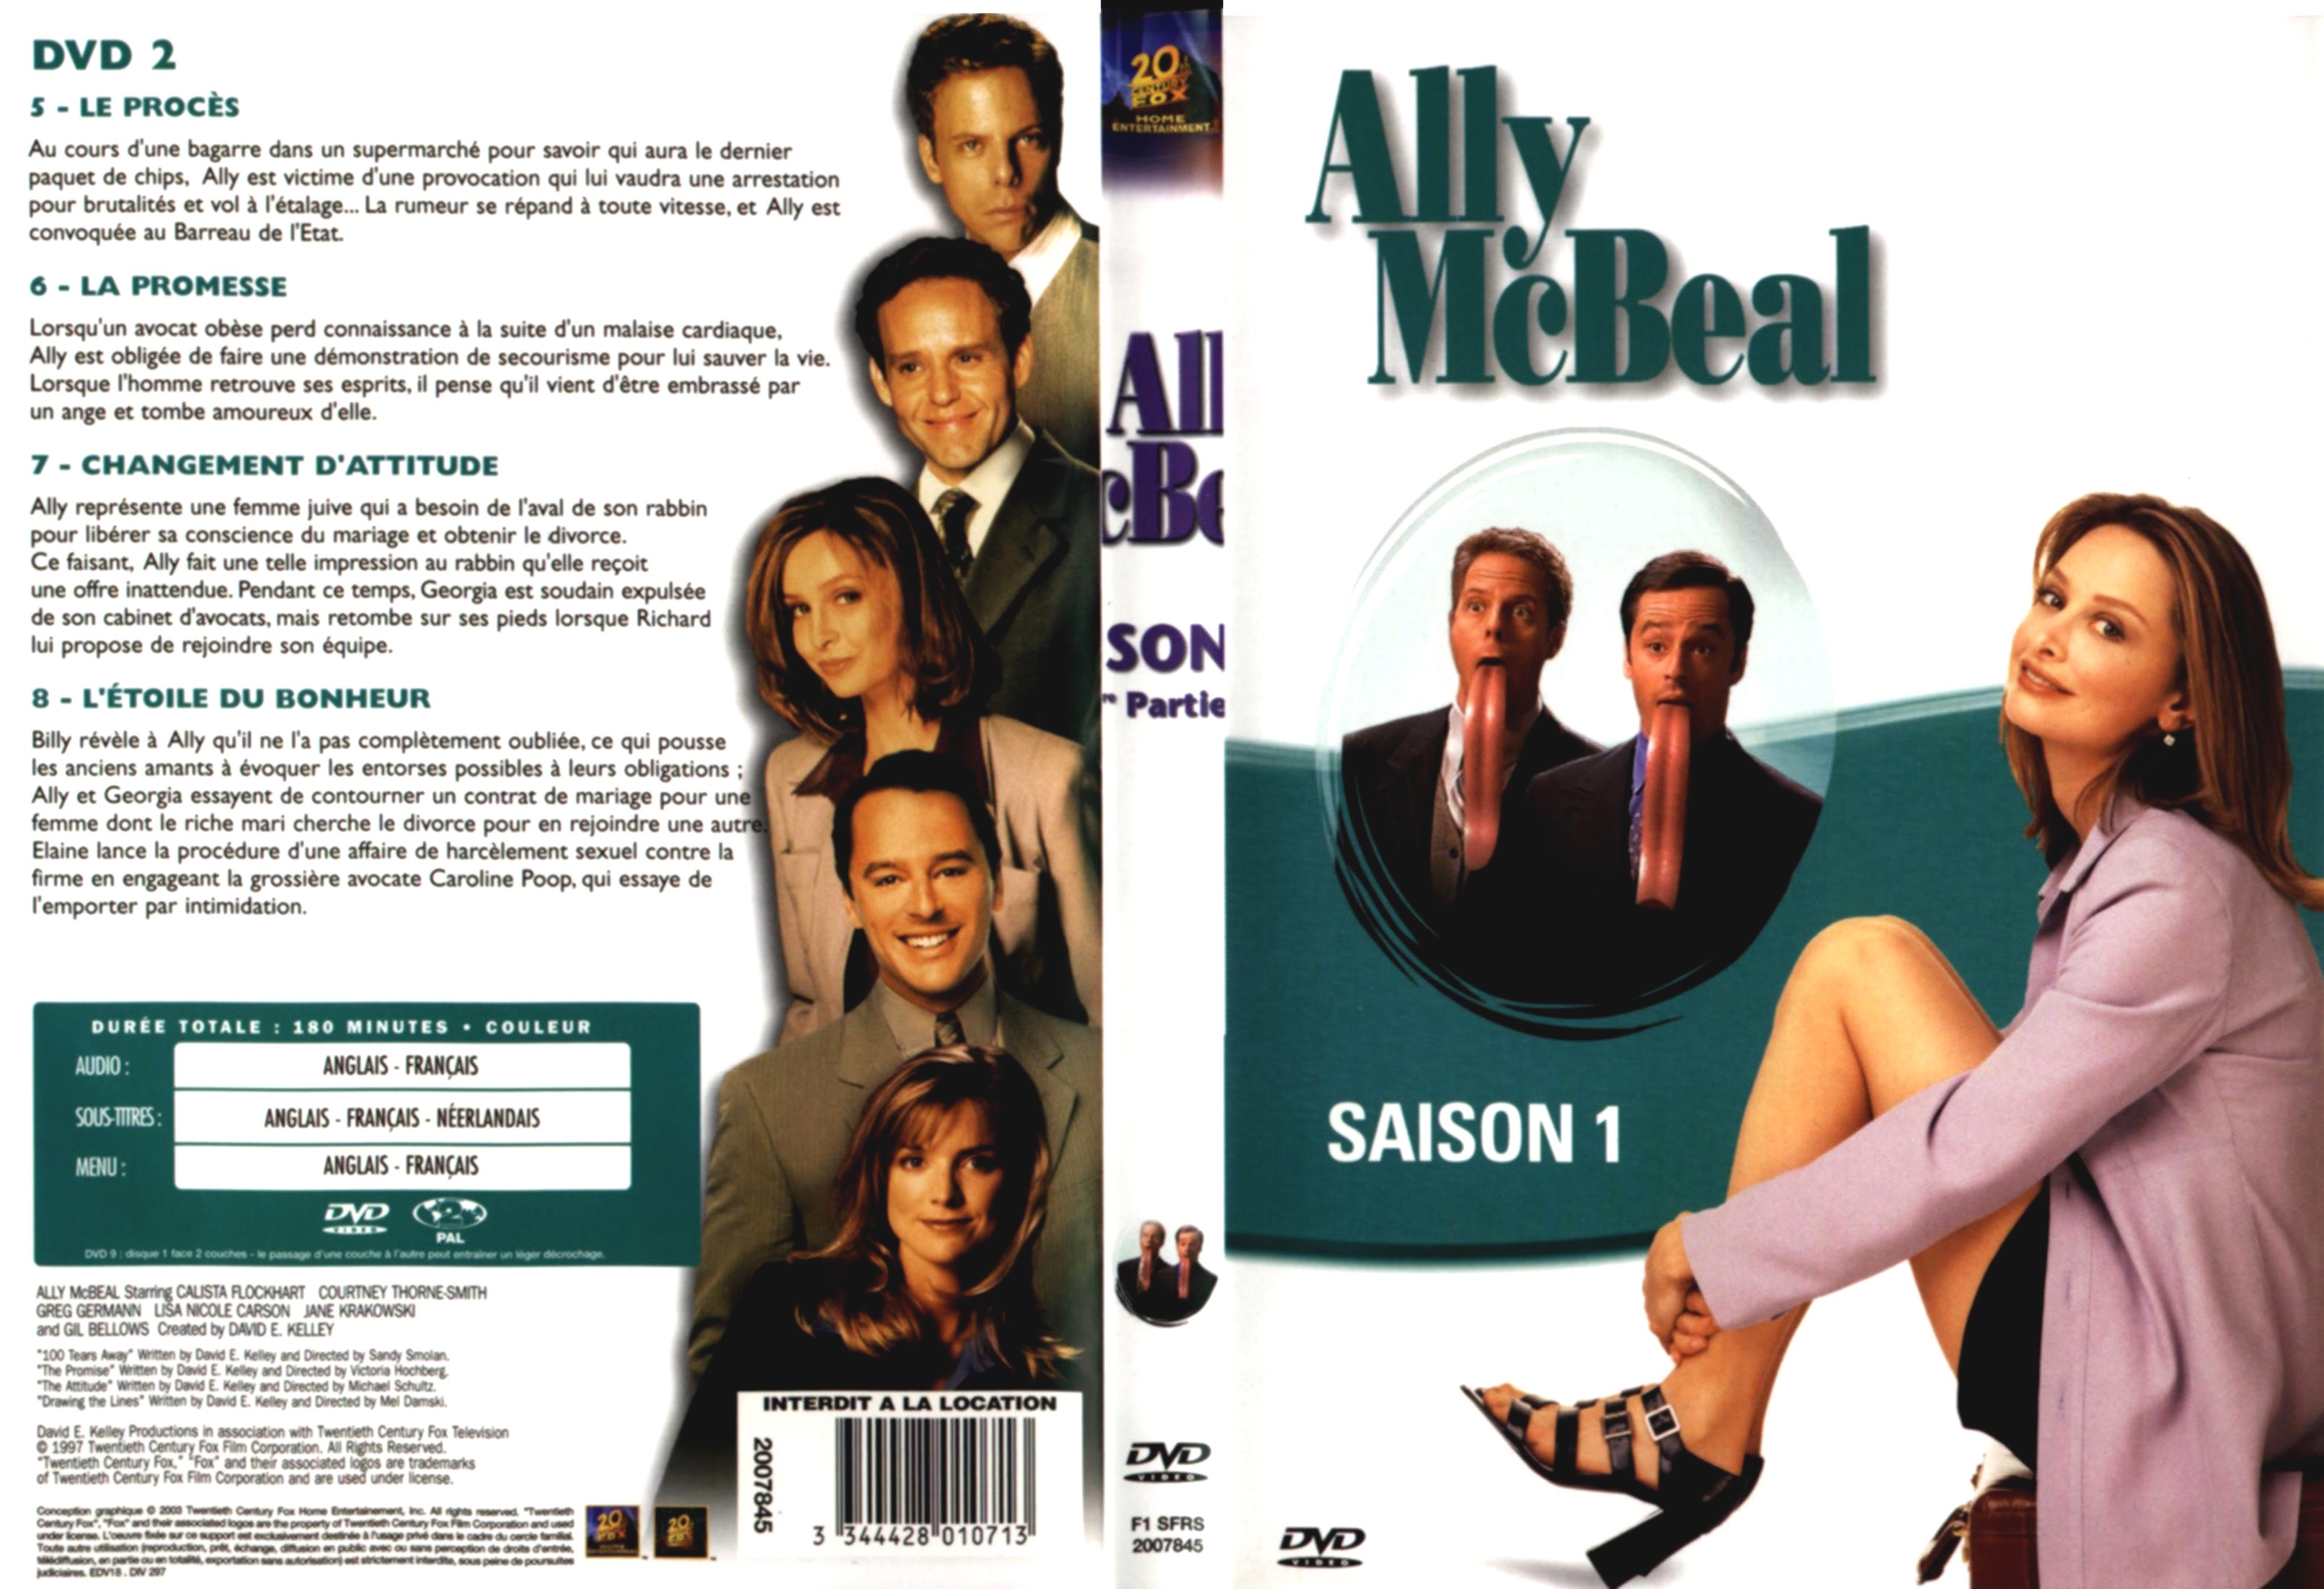 Jaquette DVD Ally McBeal Saison 1 DVD 2